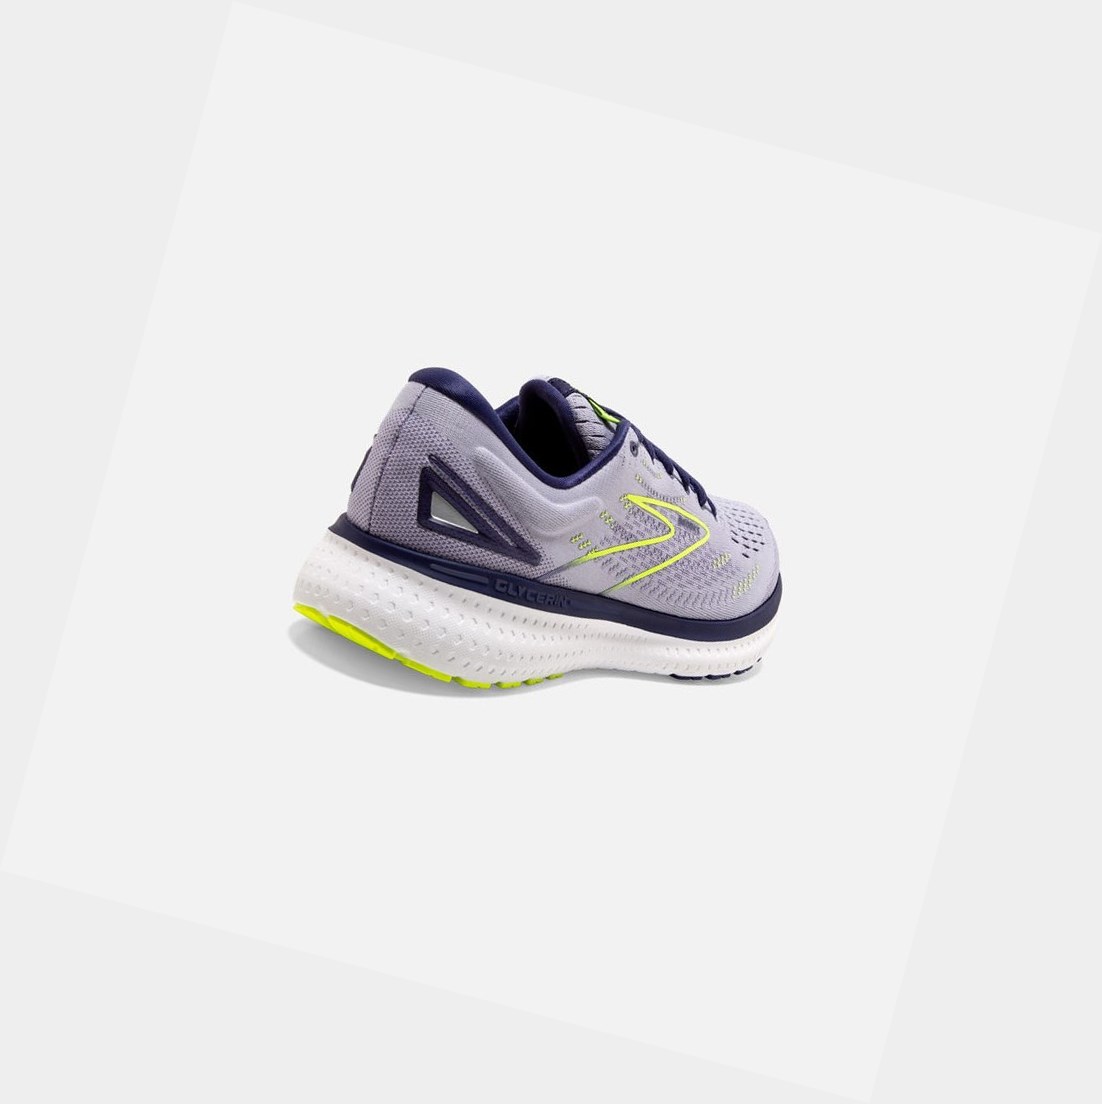 Brooks Glycerin 19 Women's Road Running Shoes Lavender / Blue / Nightlife | GLQZ-62510